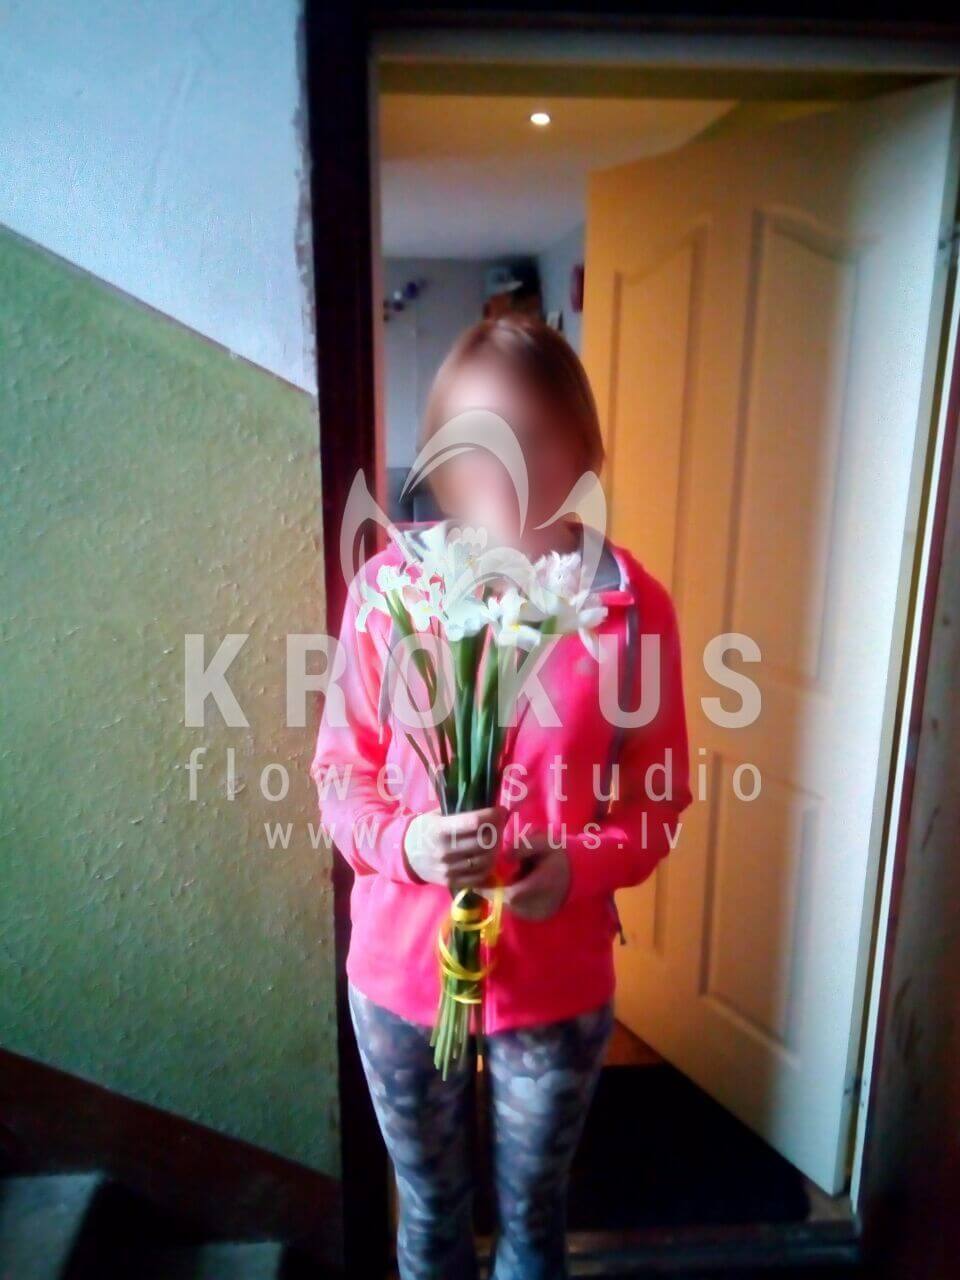 Deliver flowers to Latvia (irises)